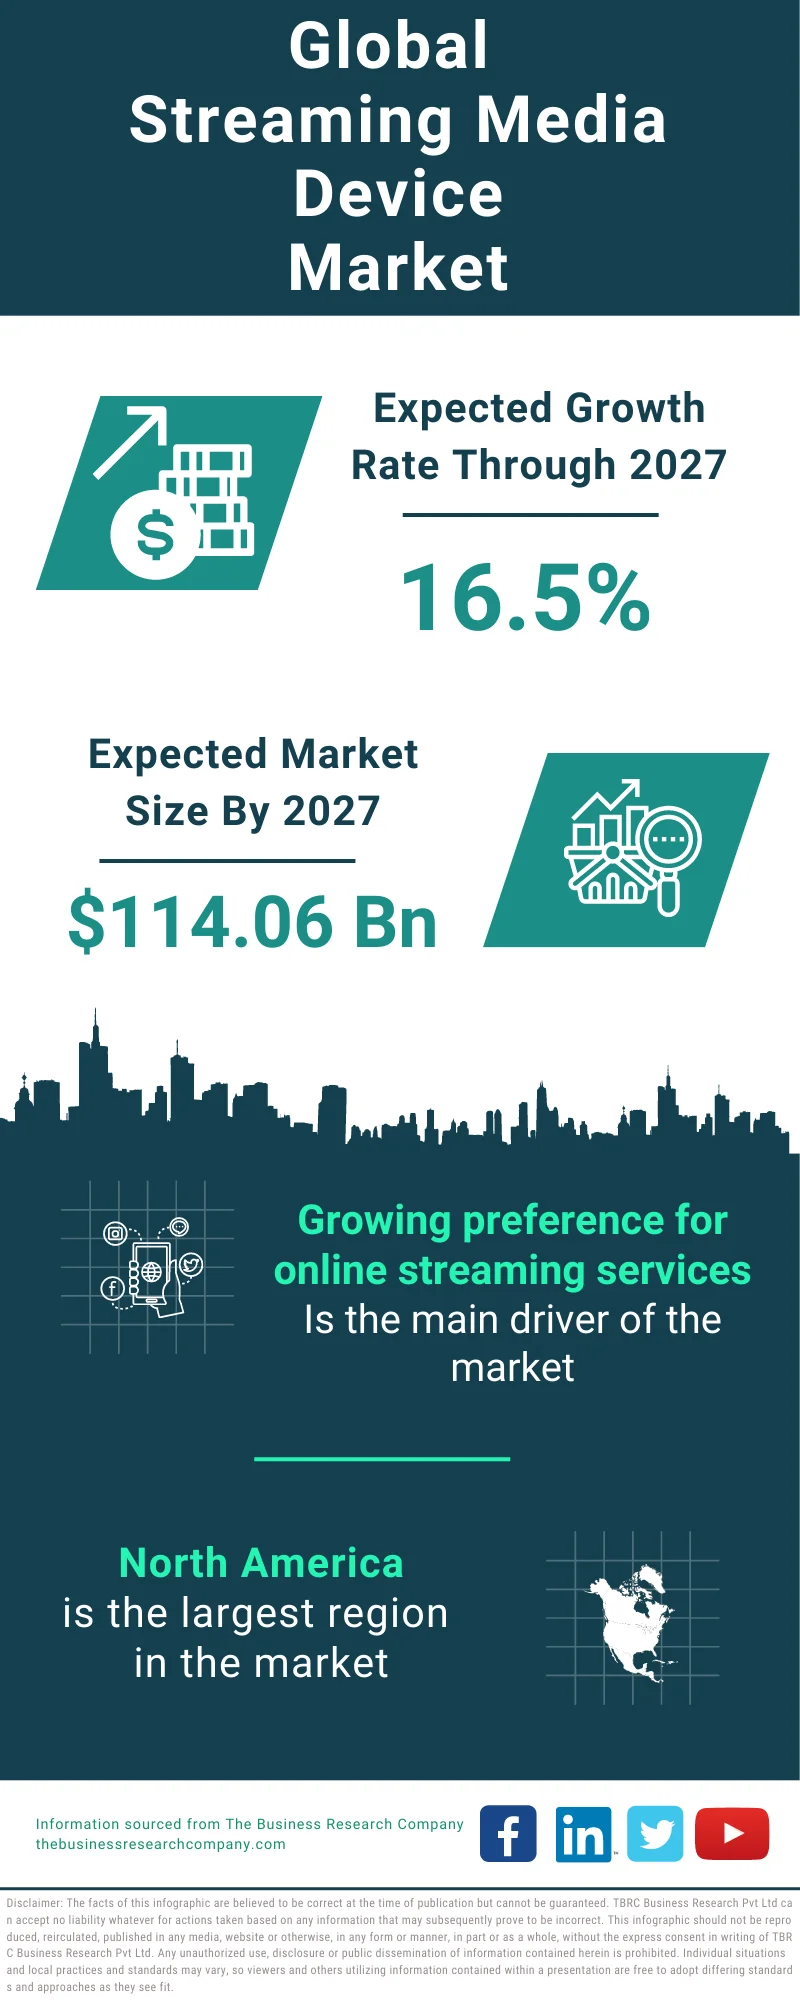 Streaming Media Device Global Market Report 2023 